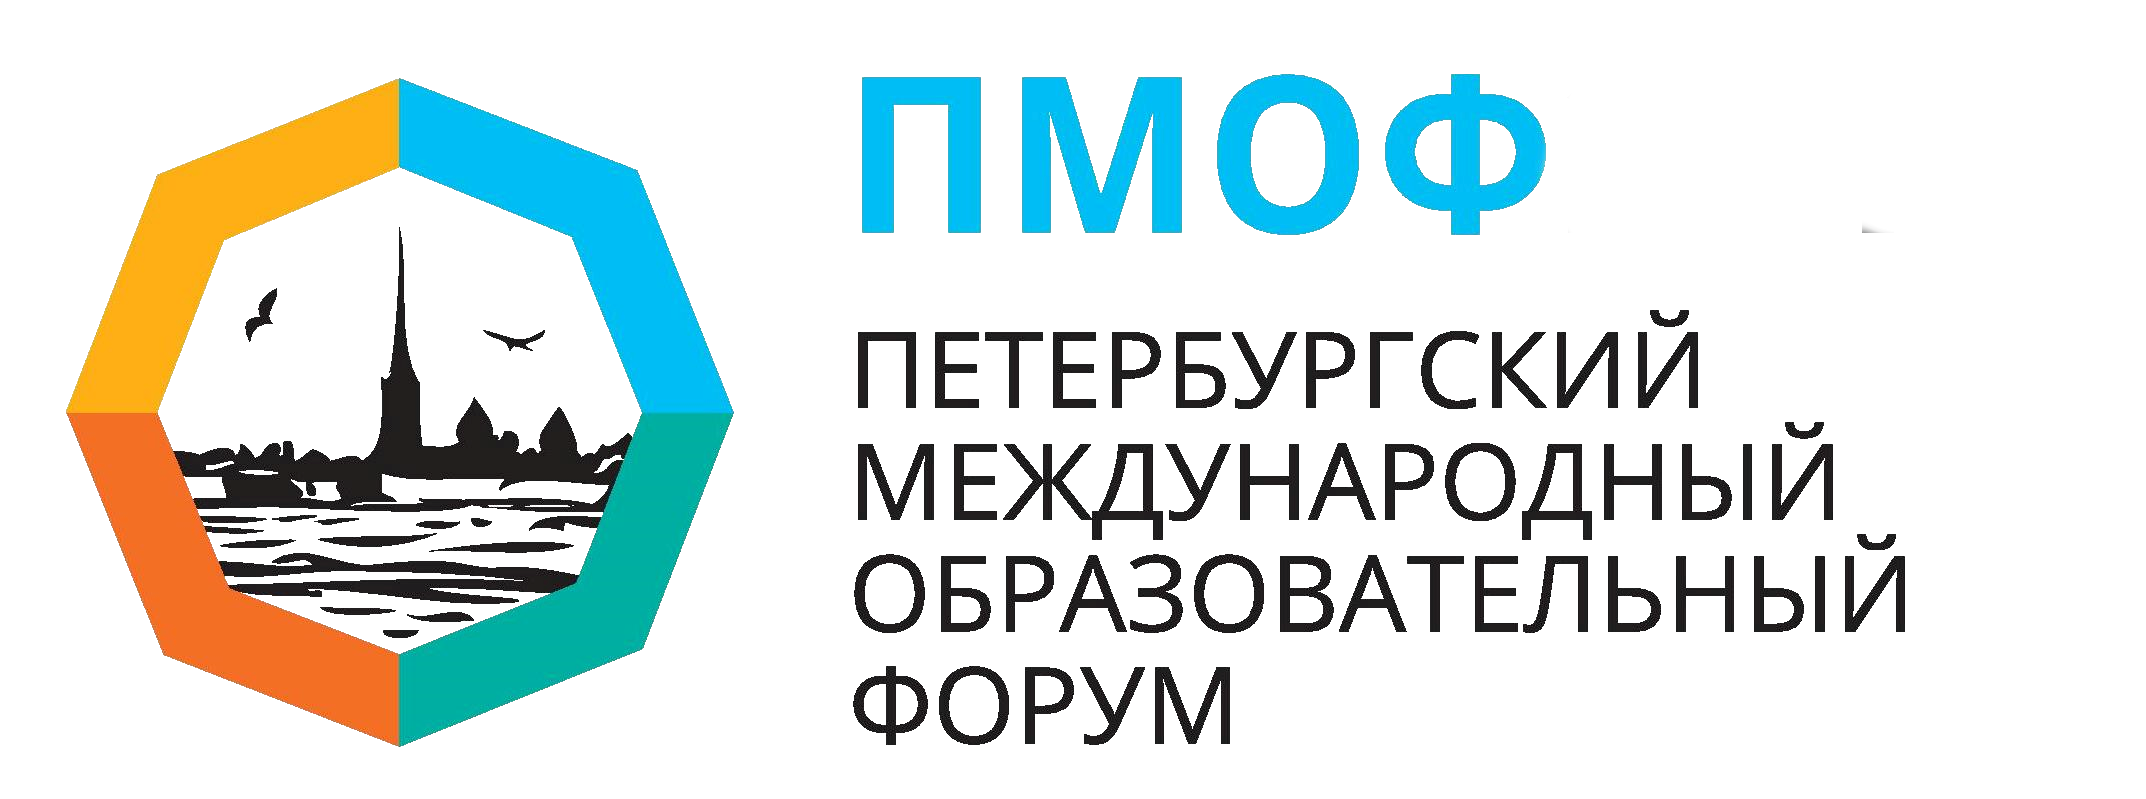 logo pof2017